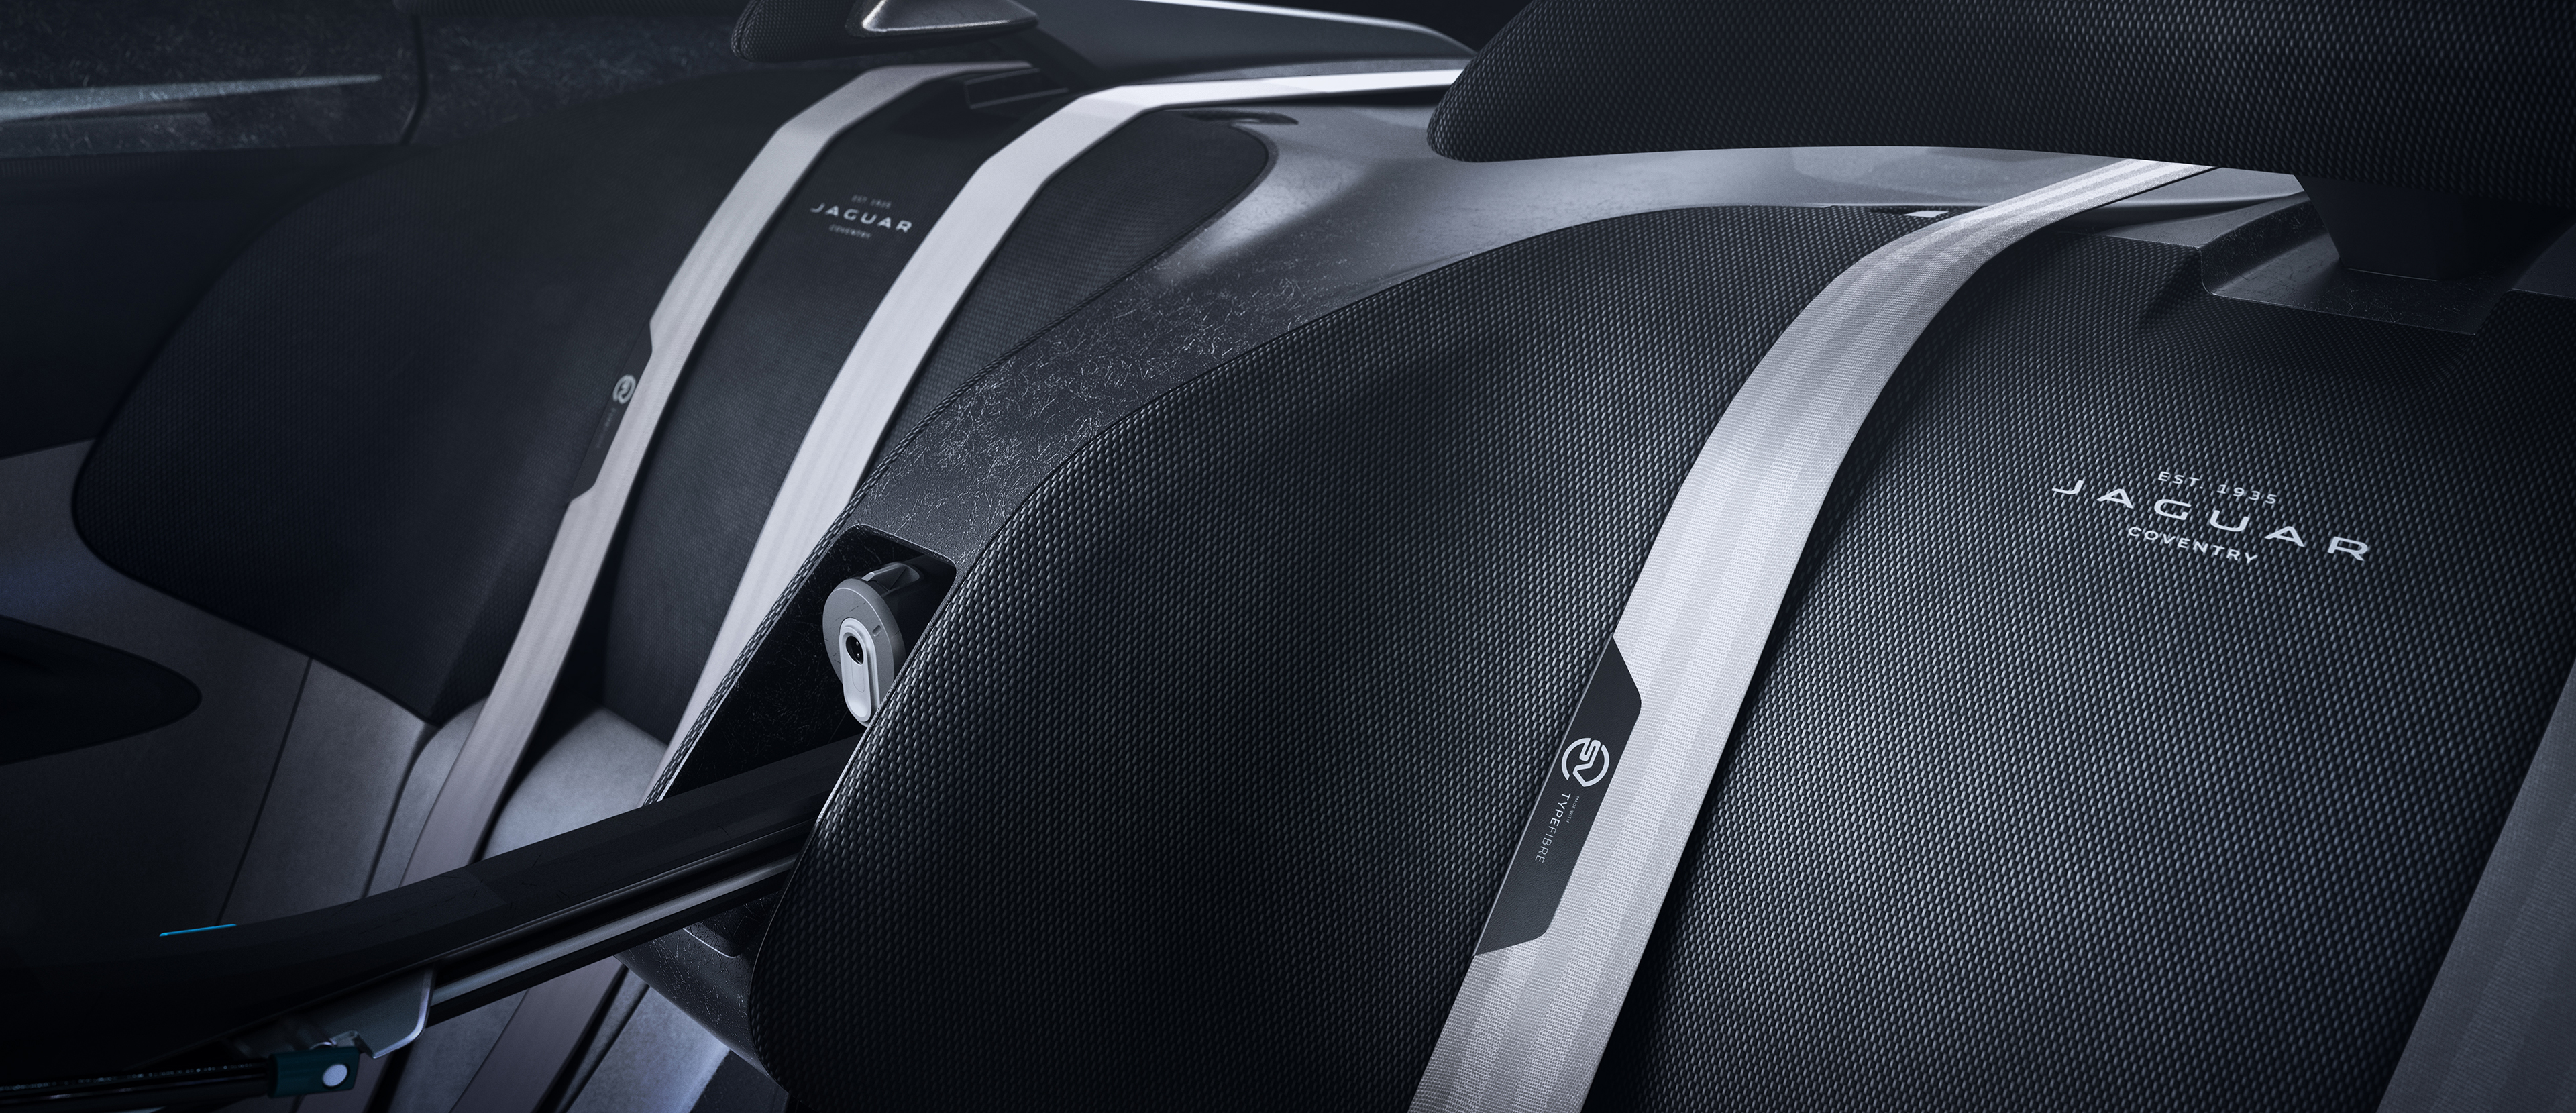 Jaguar Car Jaguar Vision GT SV Behance Car Vehicle Futuristic Concept Cars CGi Car Interior Digital  3840x1659